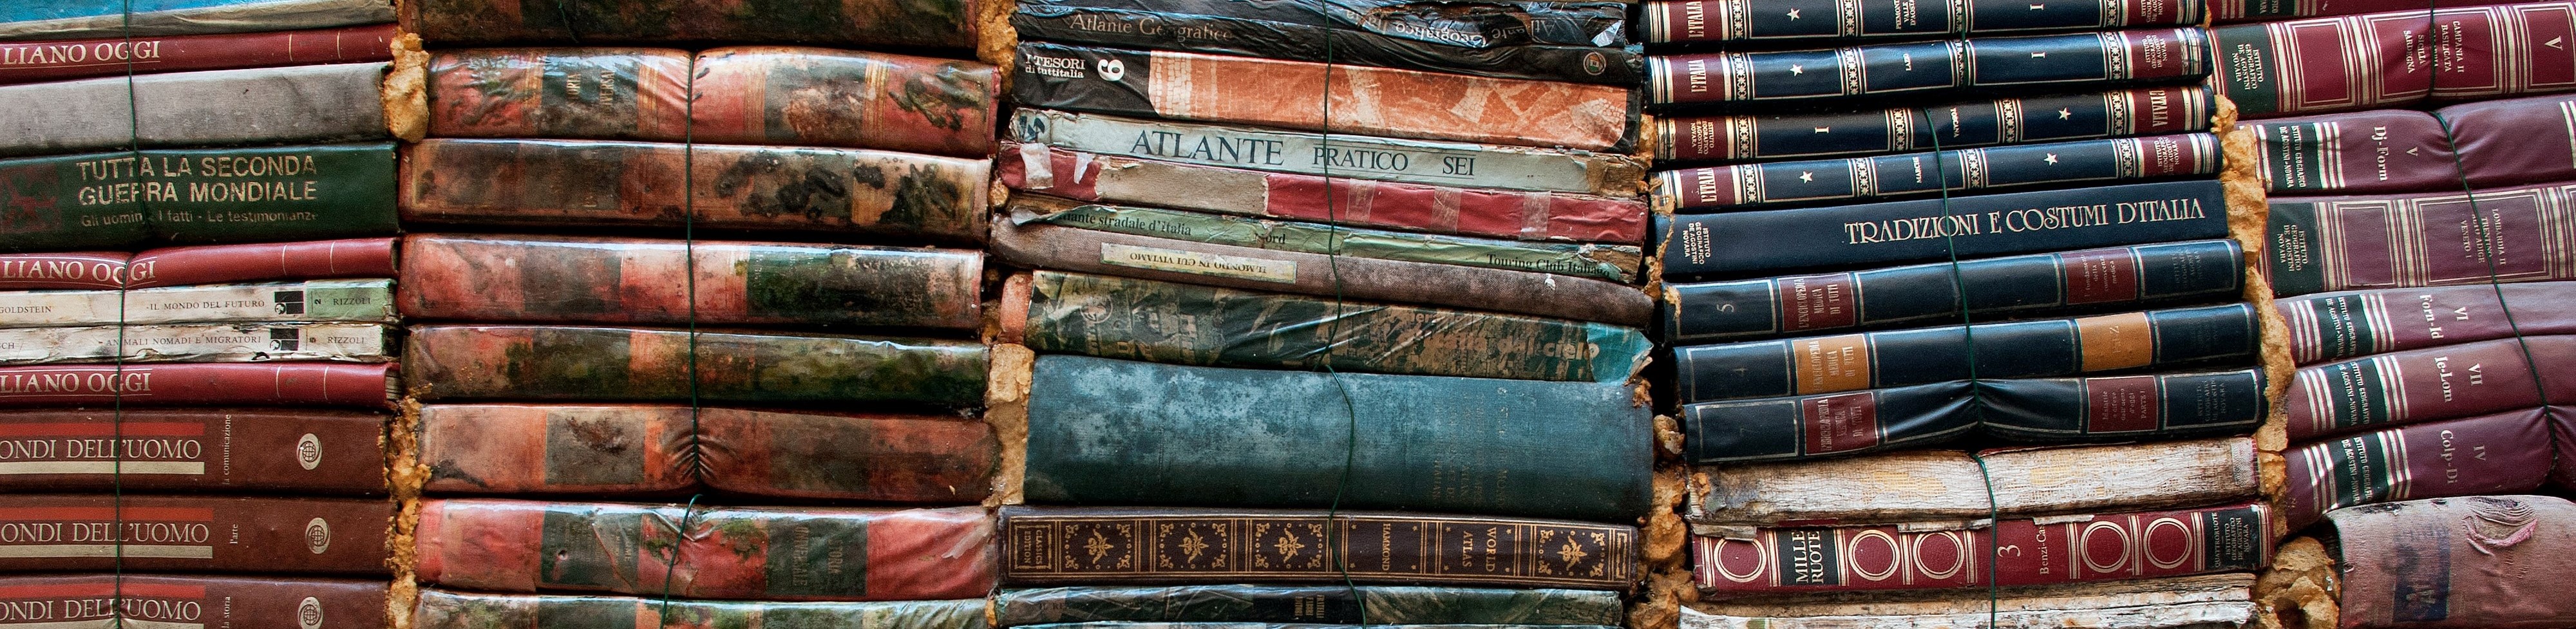 large dense stack of old books